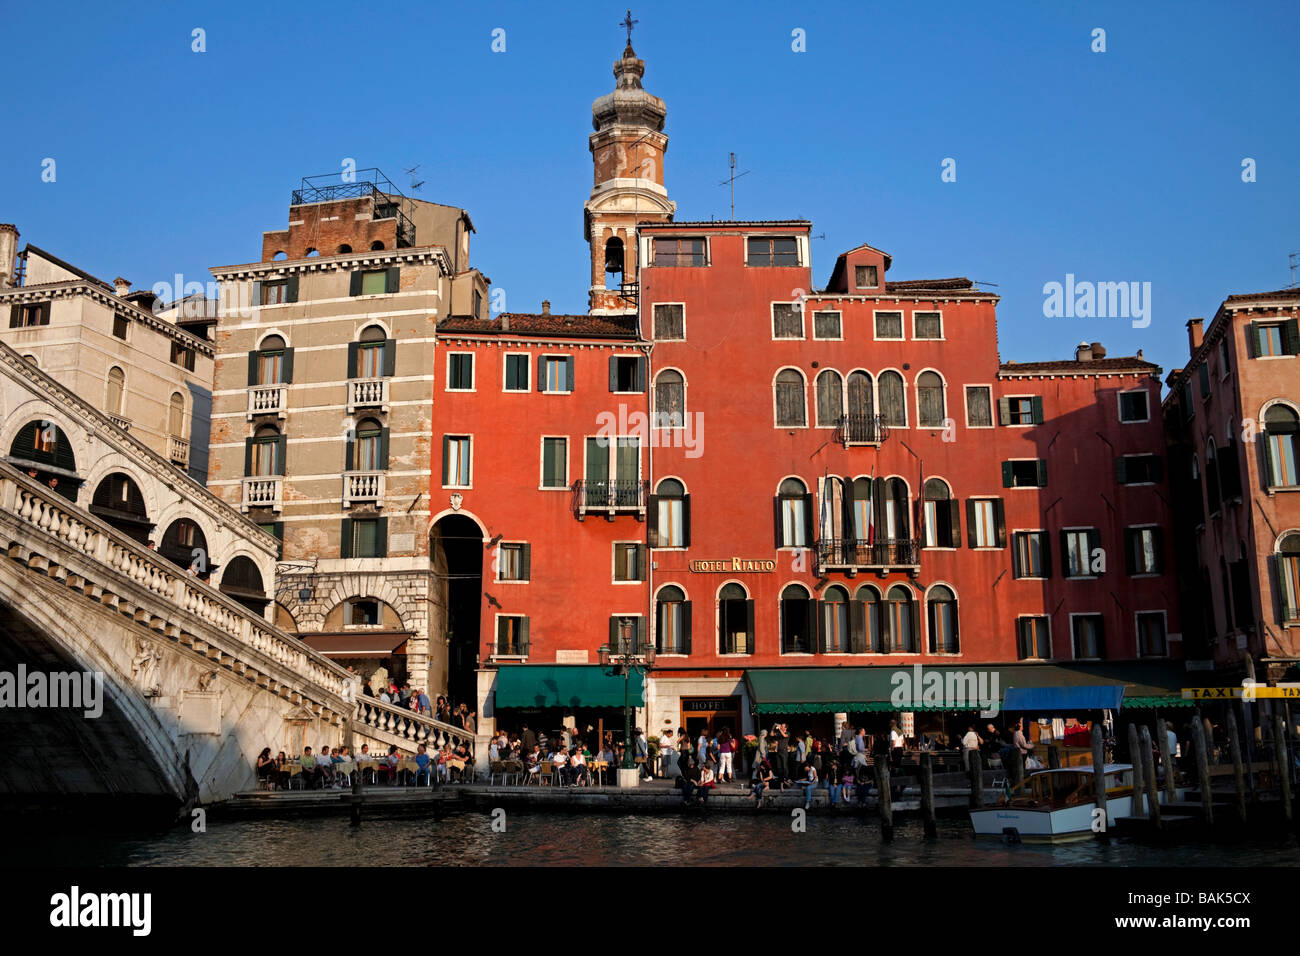 Hotel Rialto Venice Italy tourism tourists Stock Photo